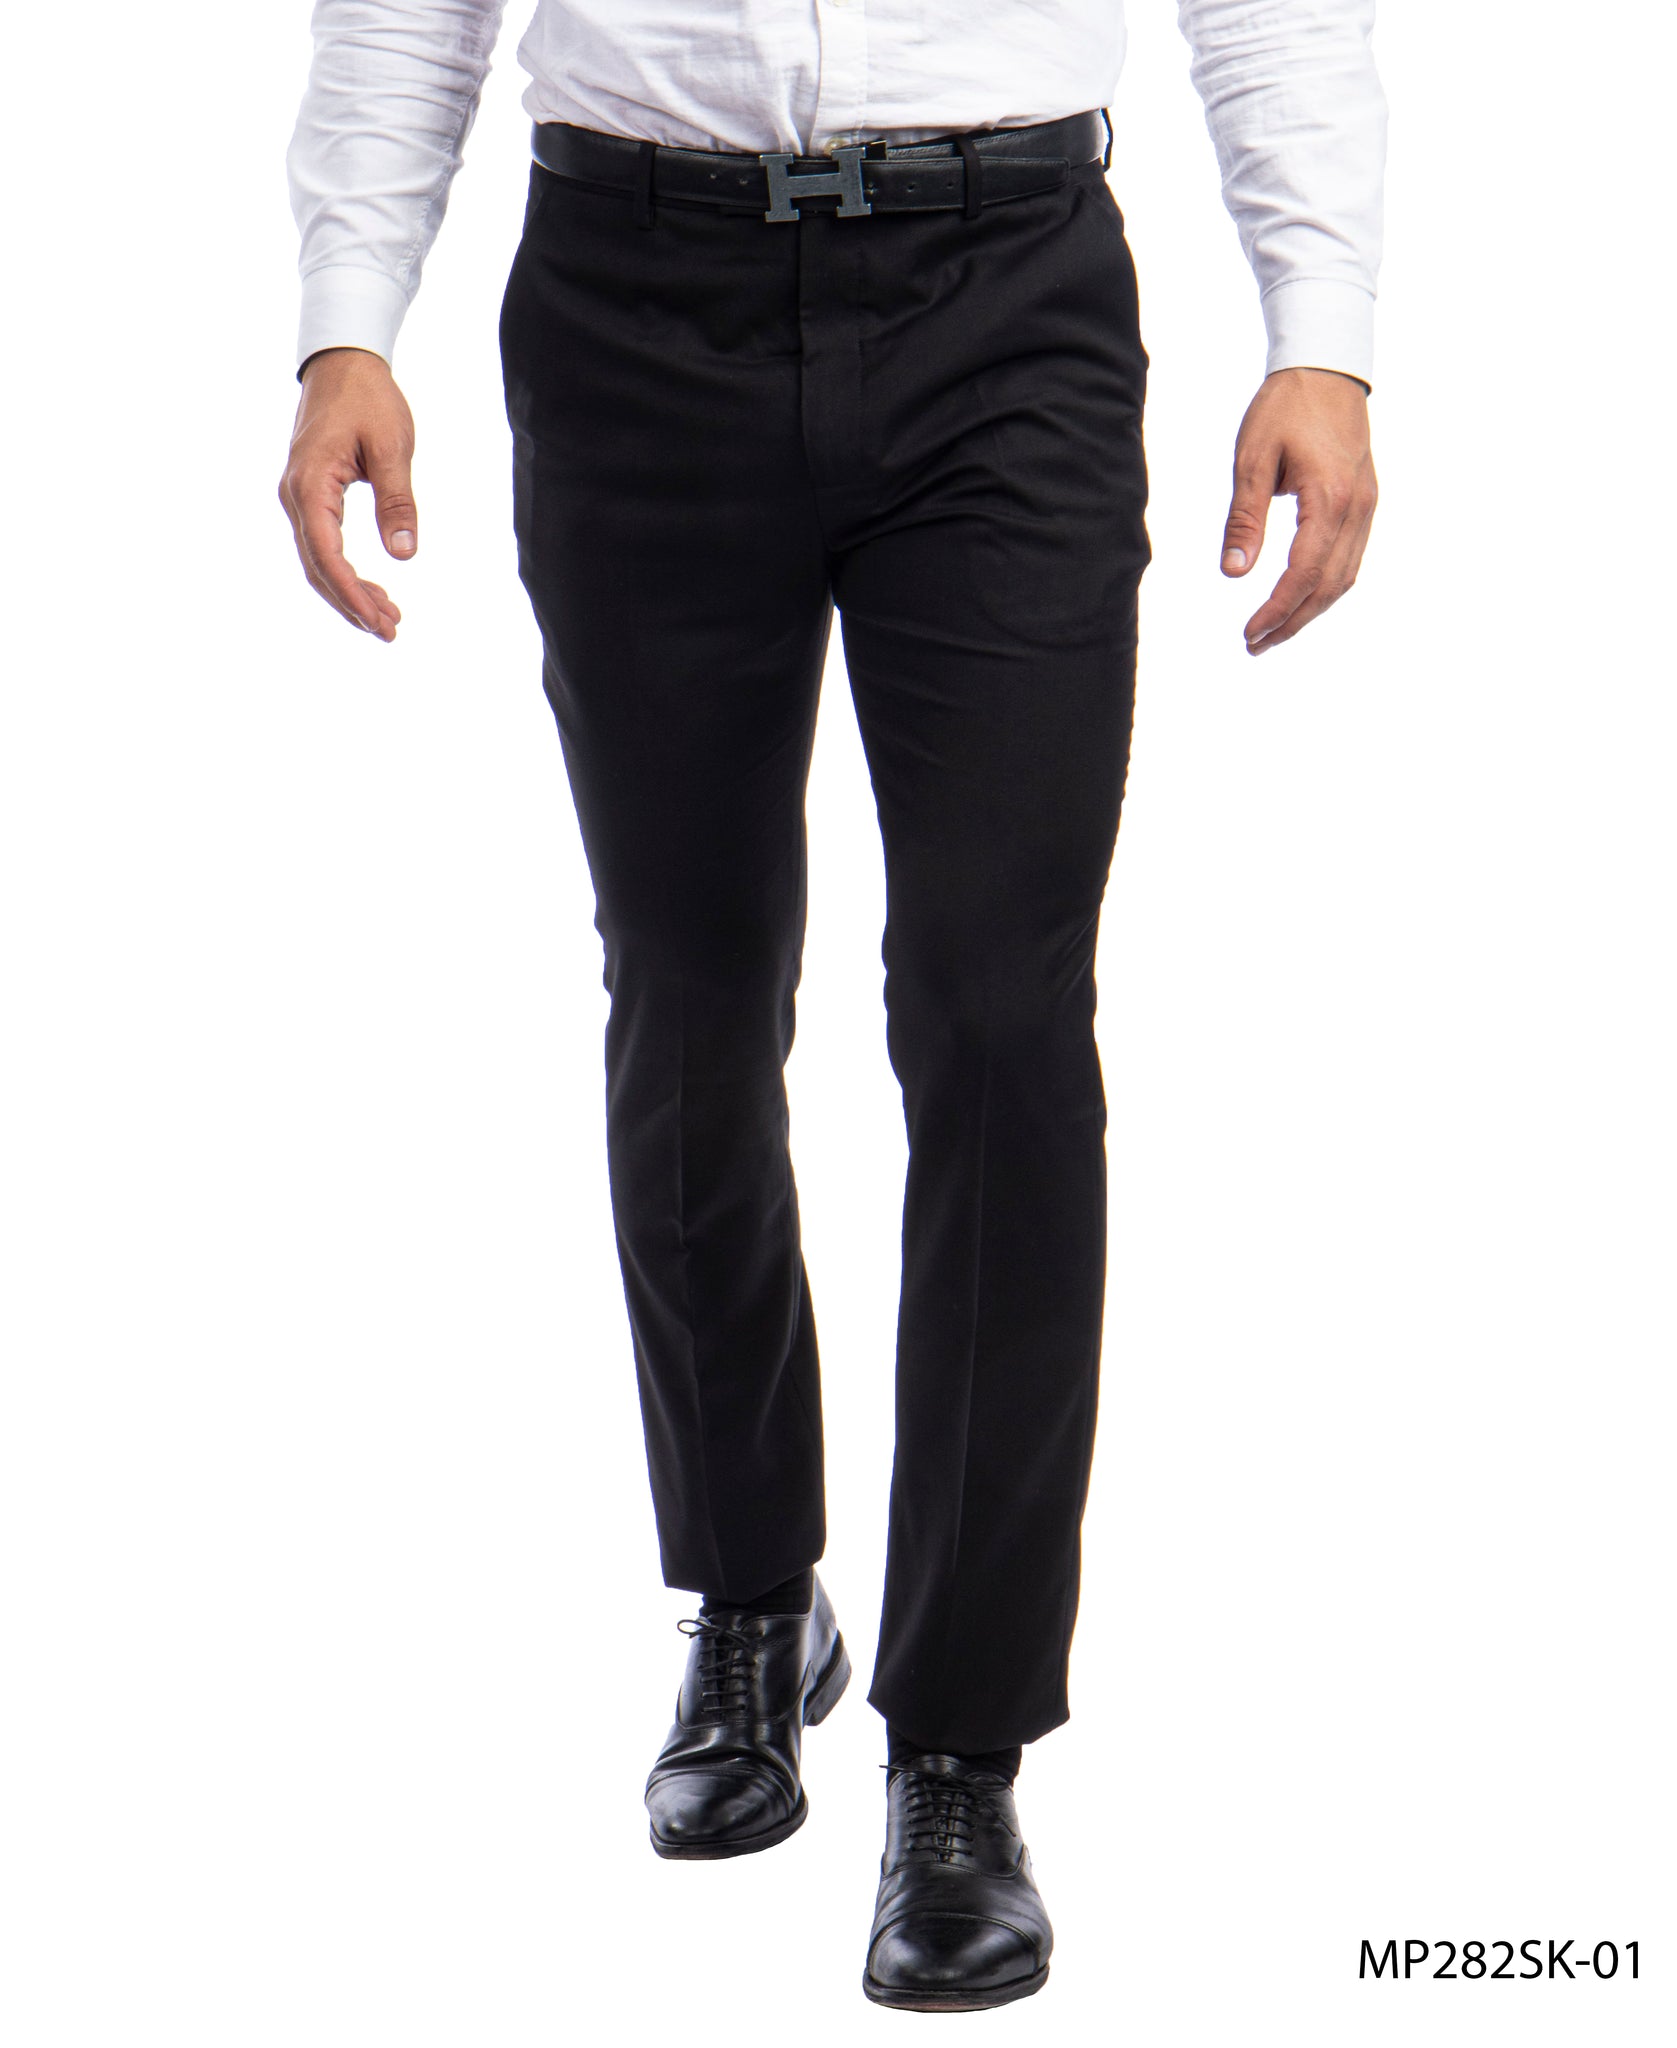 Sean Alexander Black Performance Stretch Dress Pants For Men